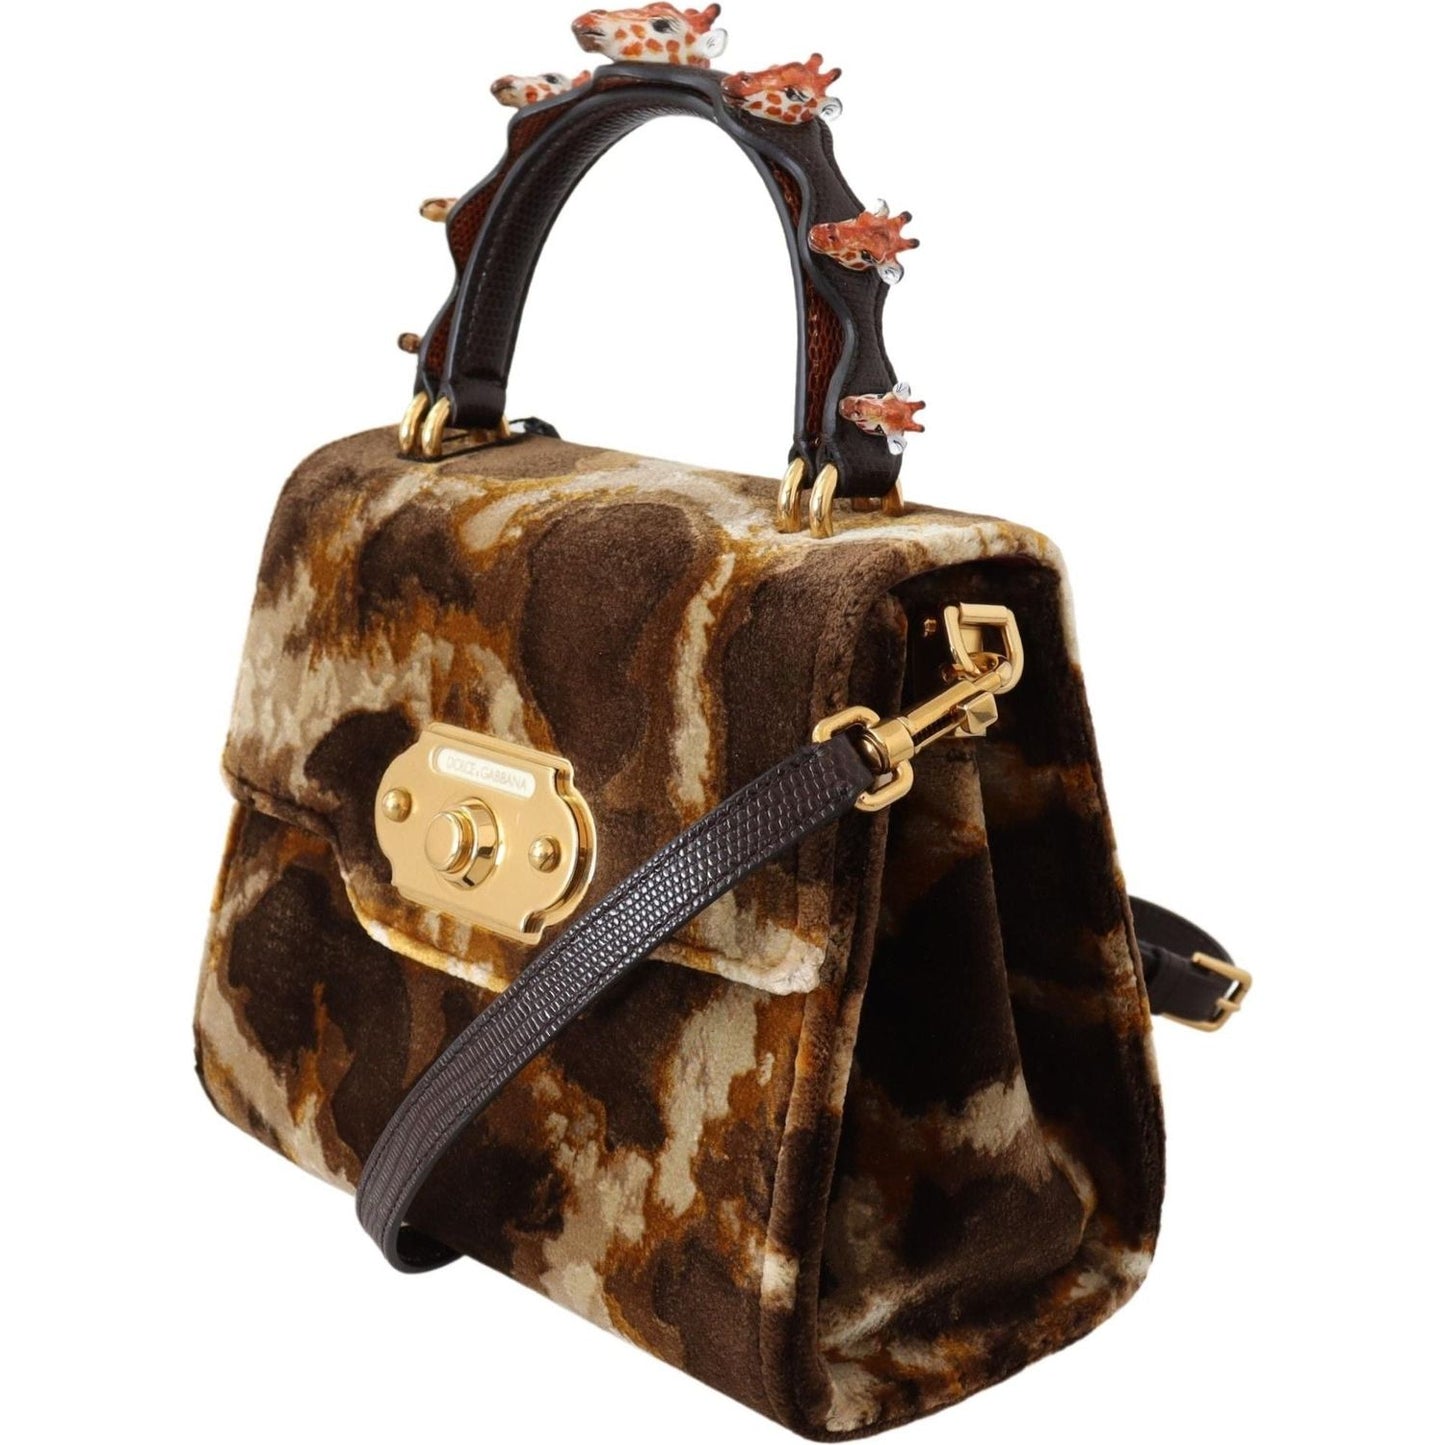 Dolce & Gabbana Elegant Giraffe Pattern Welcome Bag with Gold Accents brown-giraffe-crossbody-purse-borse-welcome-purse IMG_2375-233dacb7-3d8.jpg